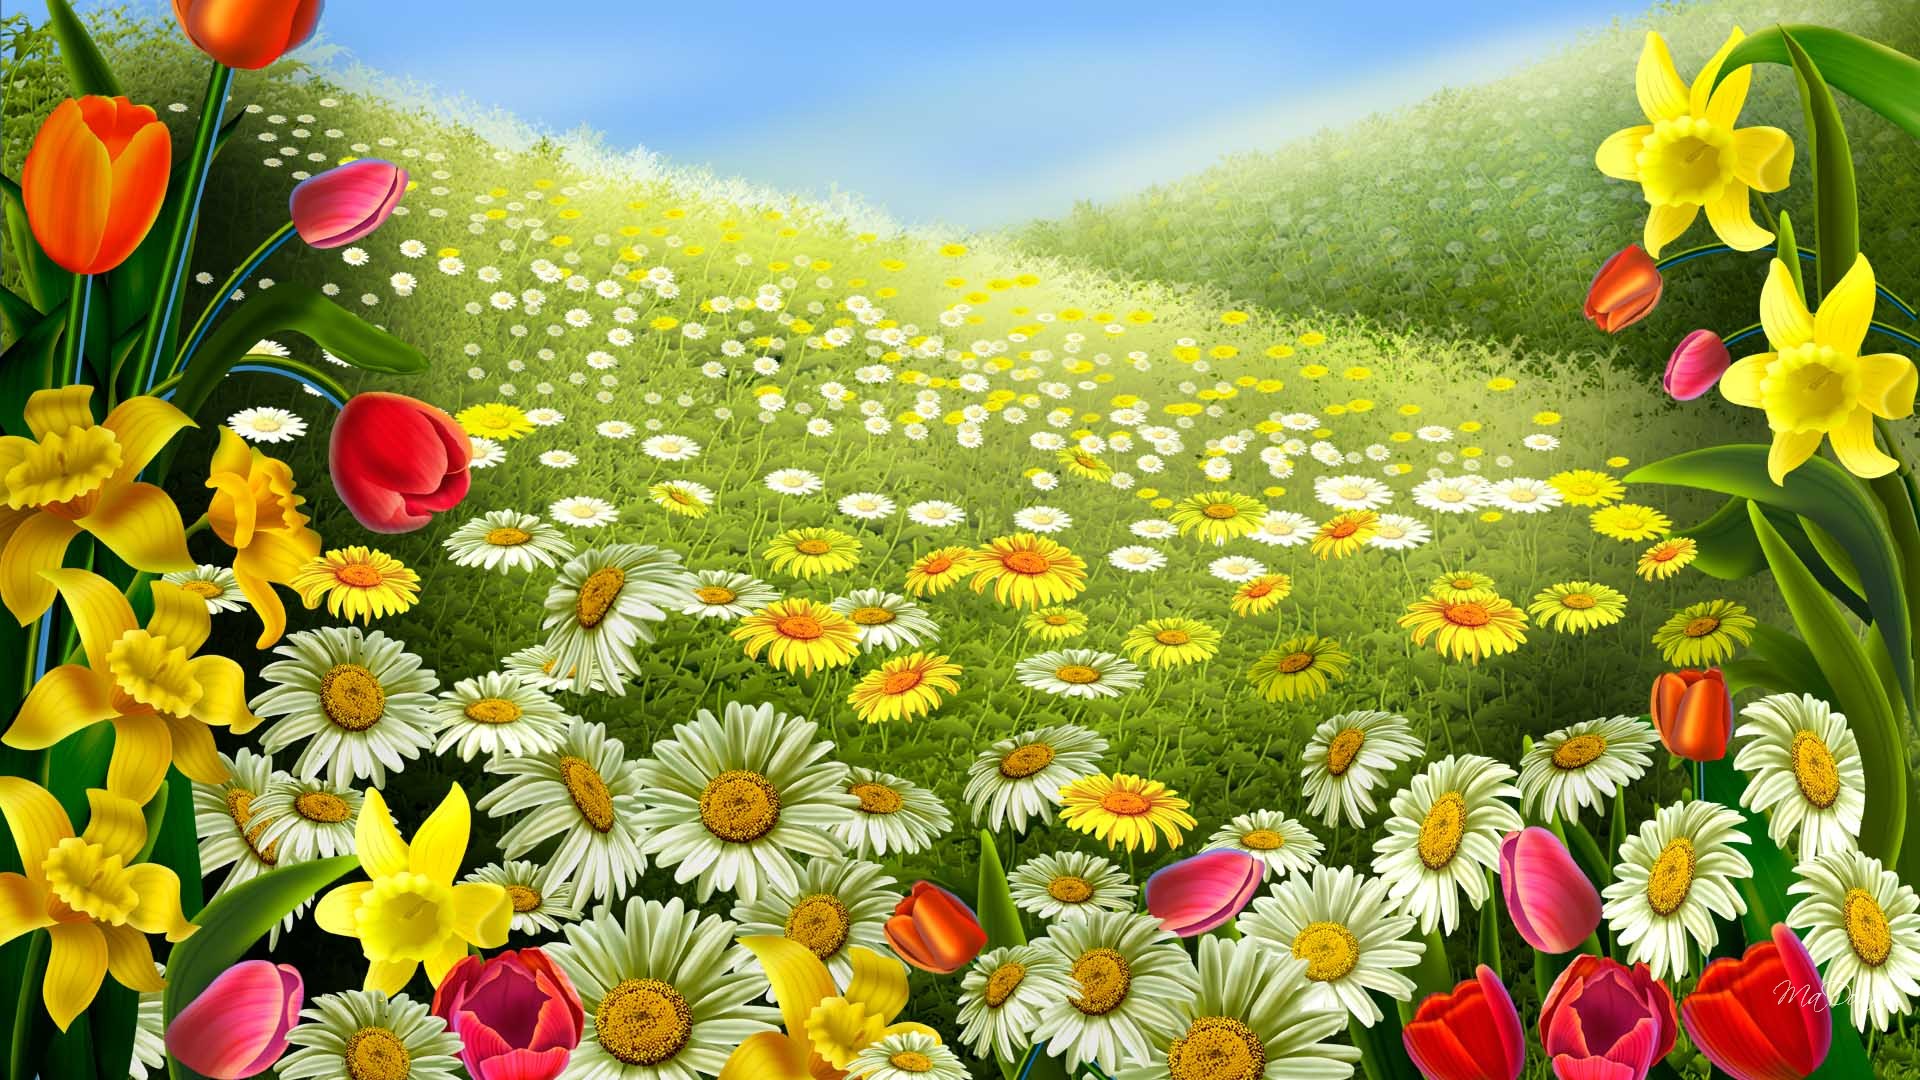 Spring Wallpaper HD Background Image